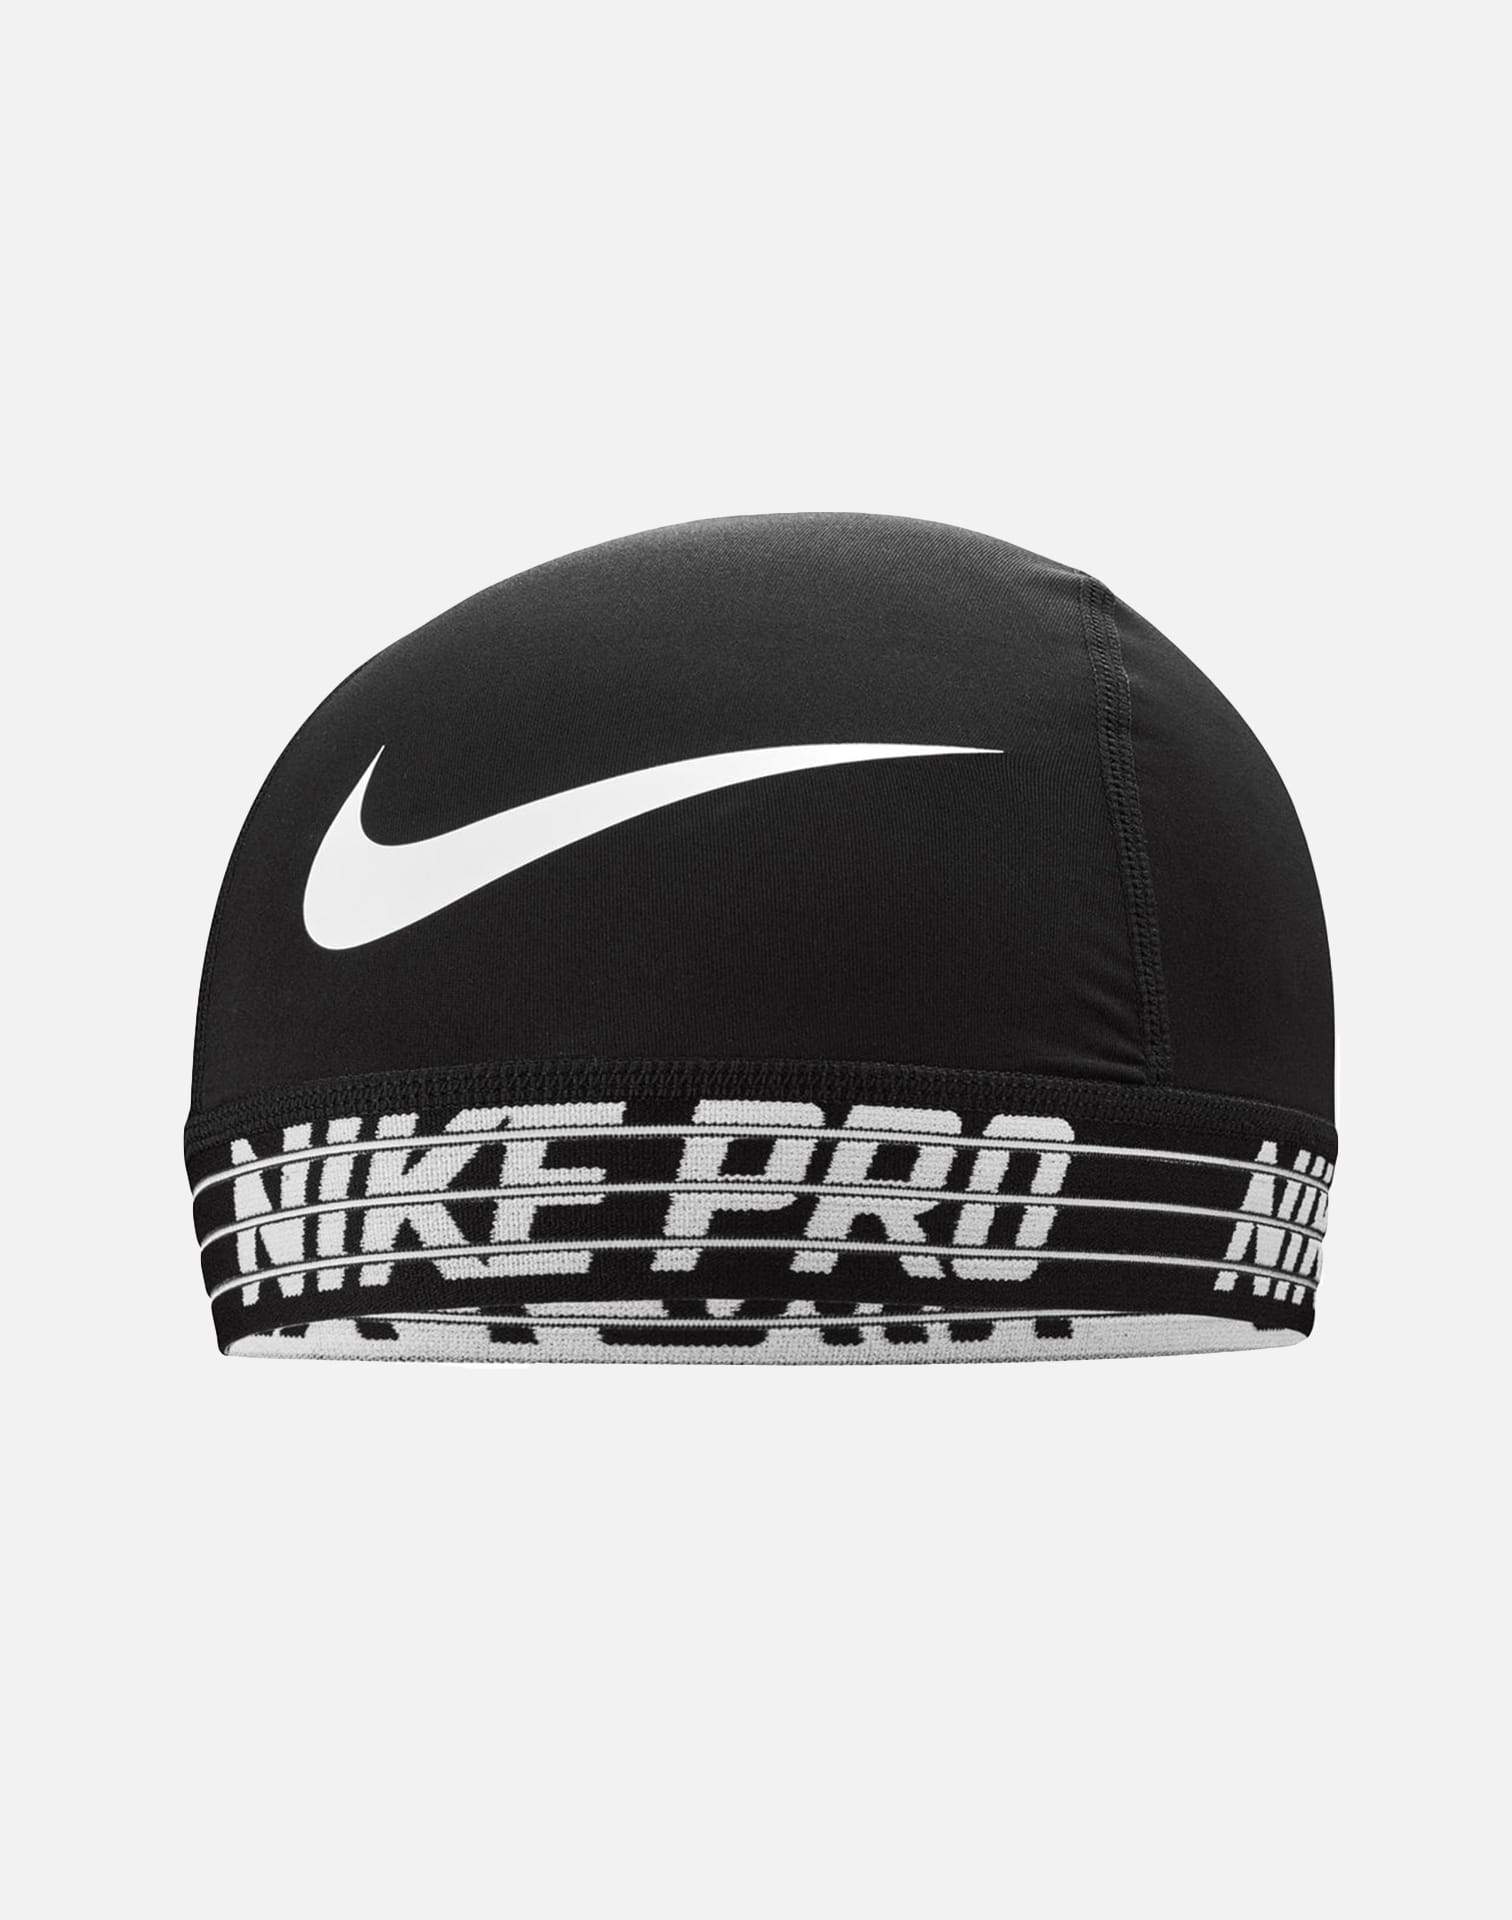 Nike Pro Skull Cap 2.0